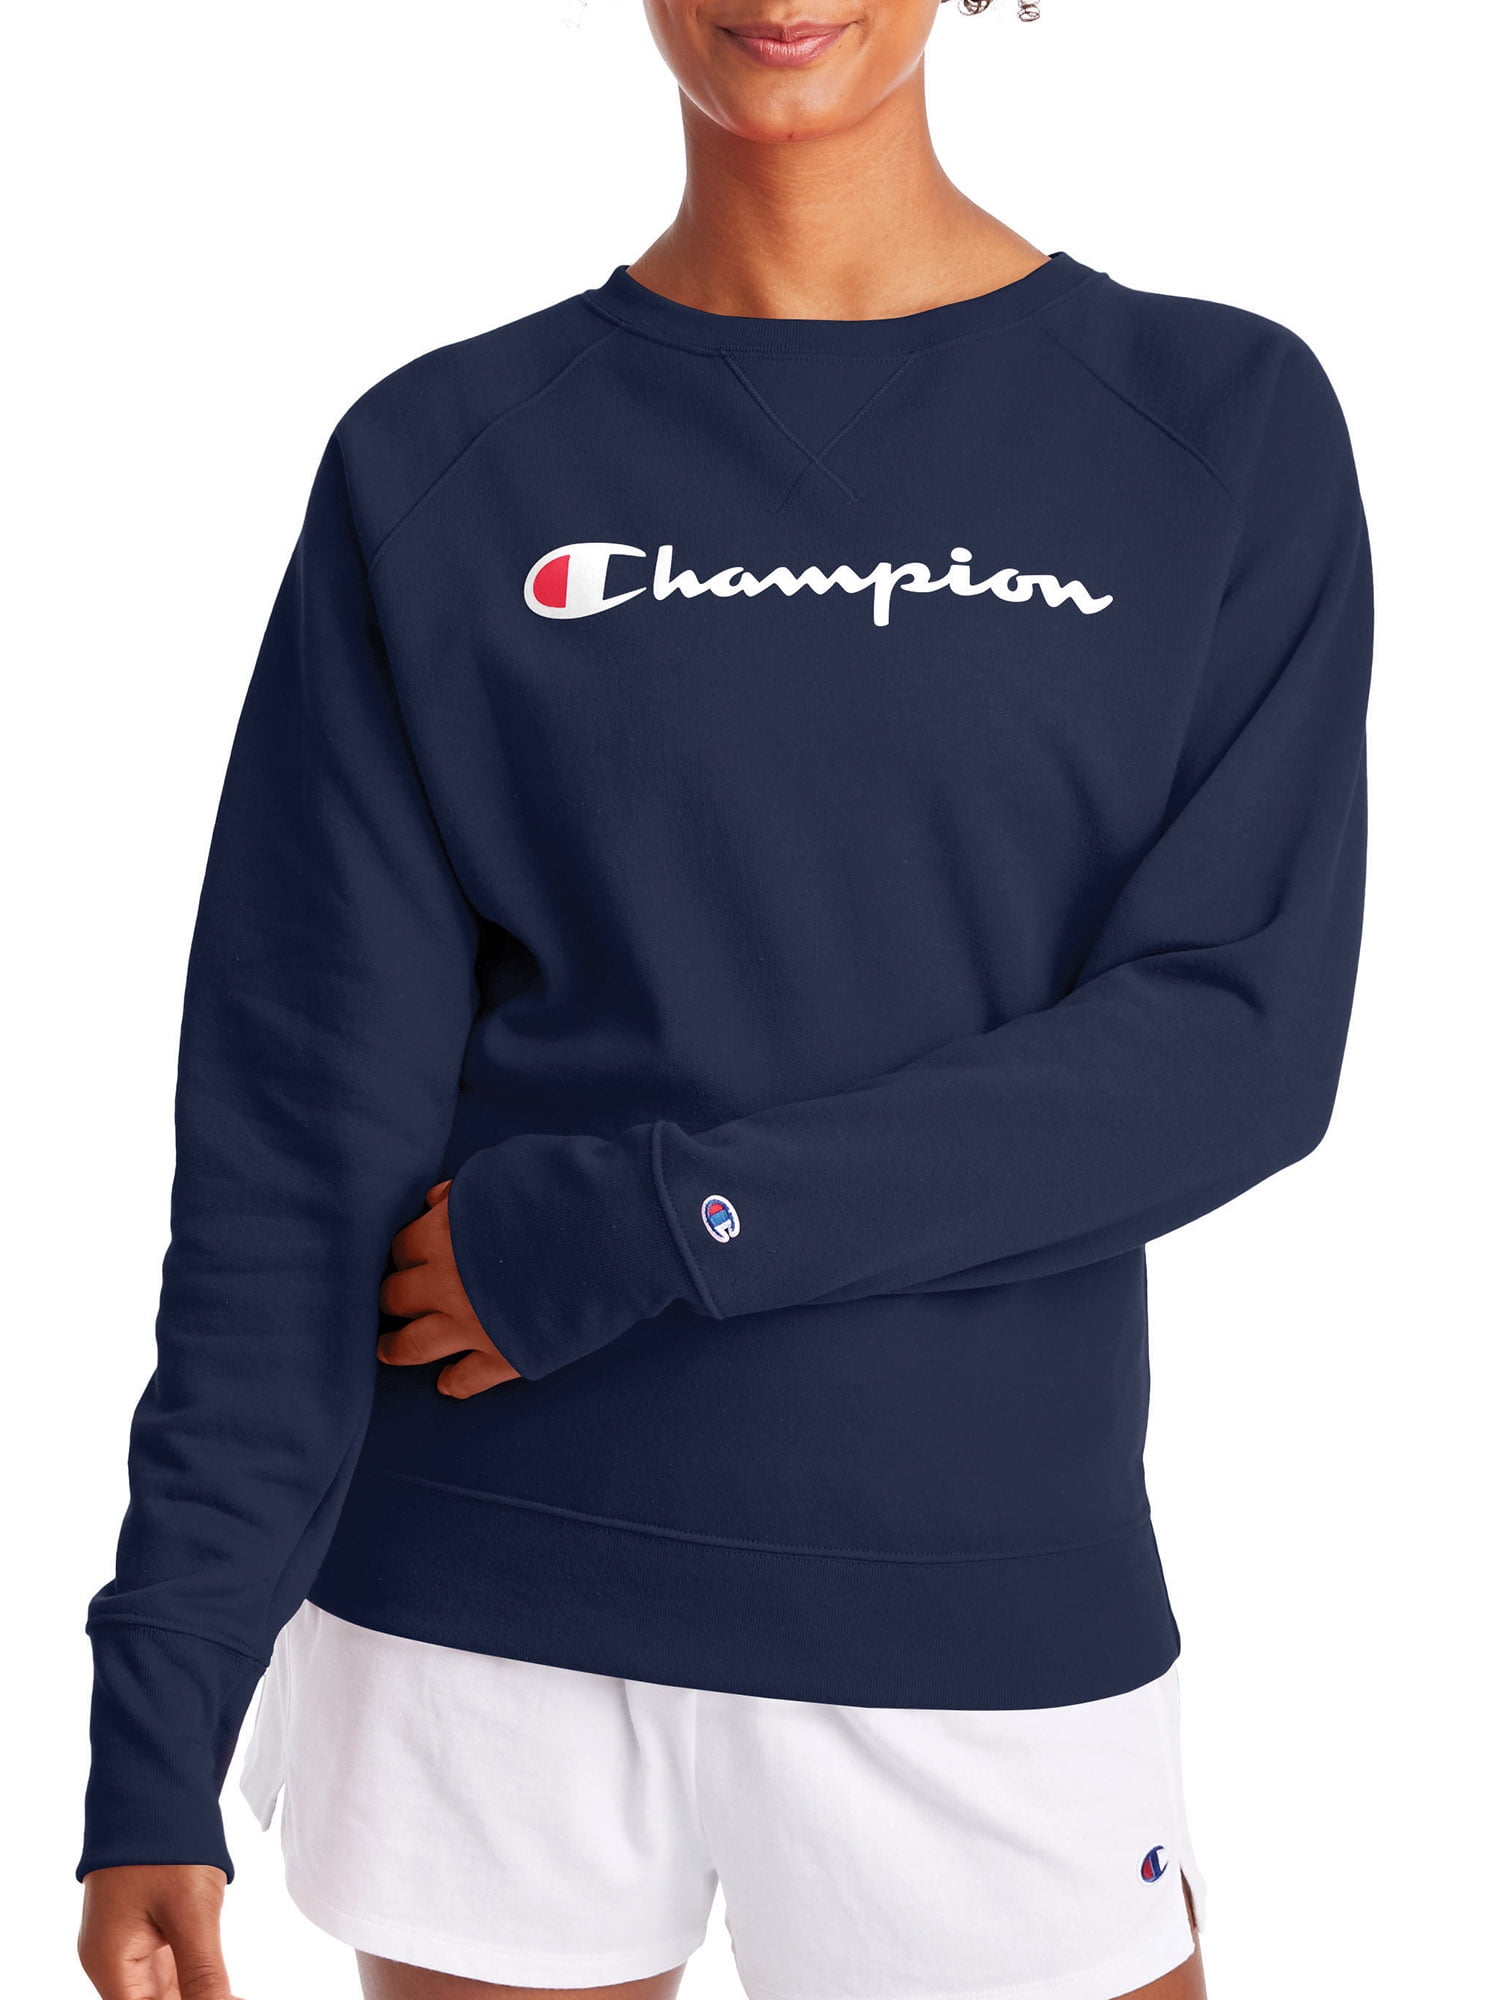 champion sweatshirt walmart